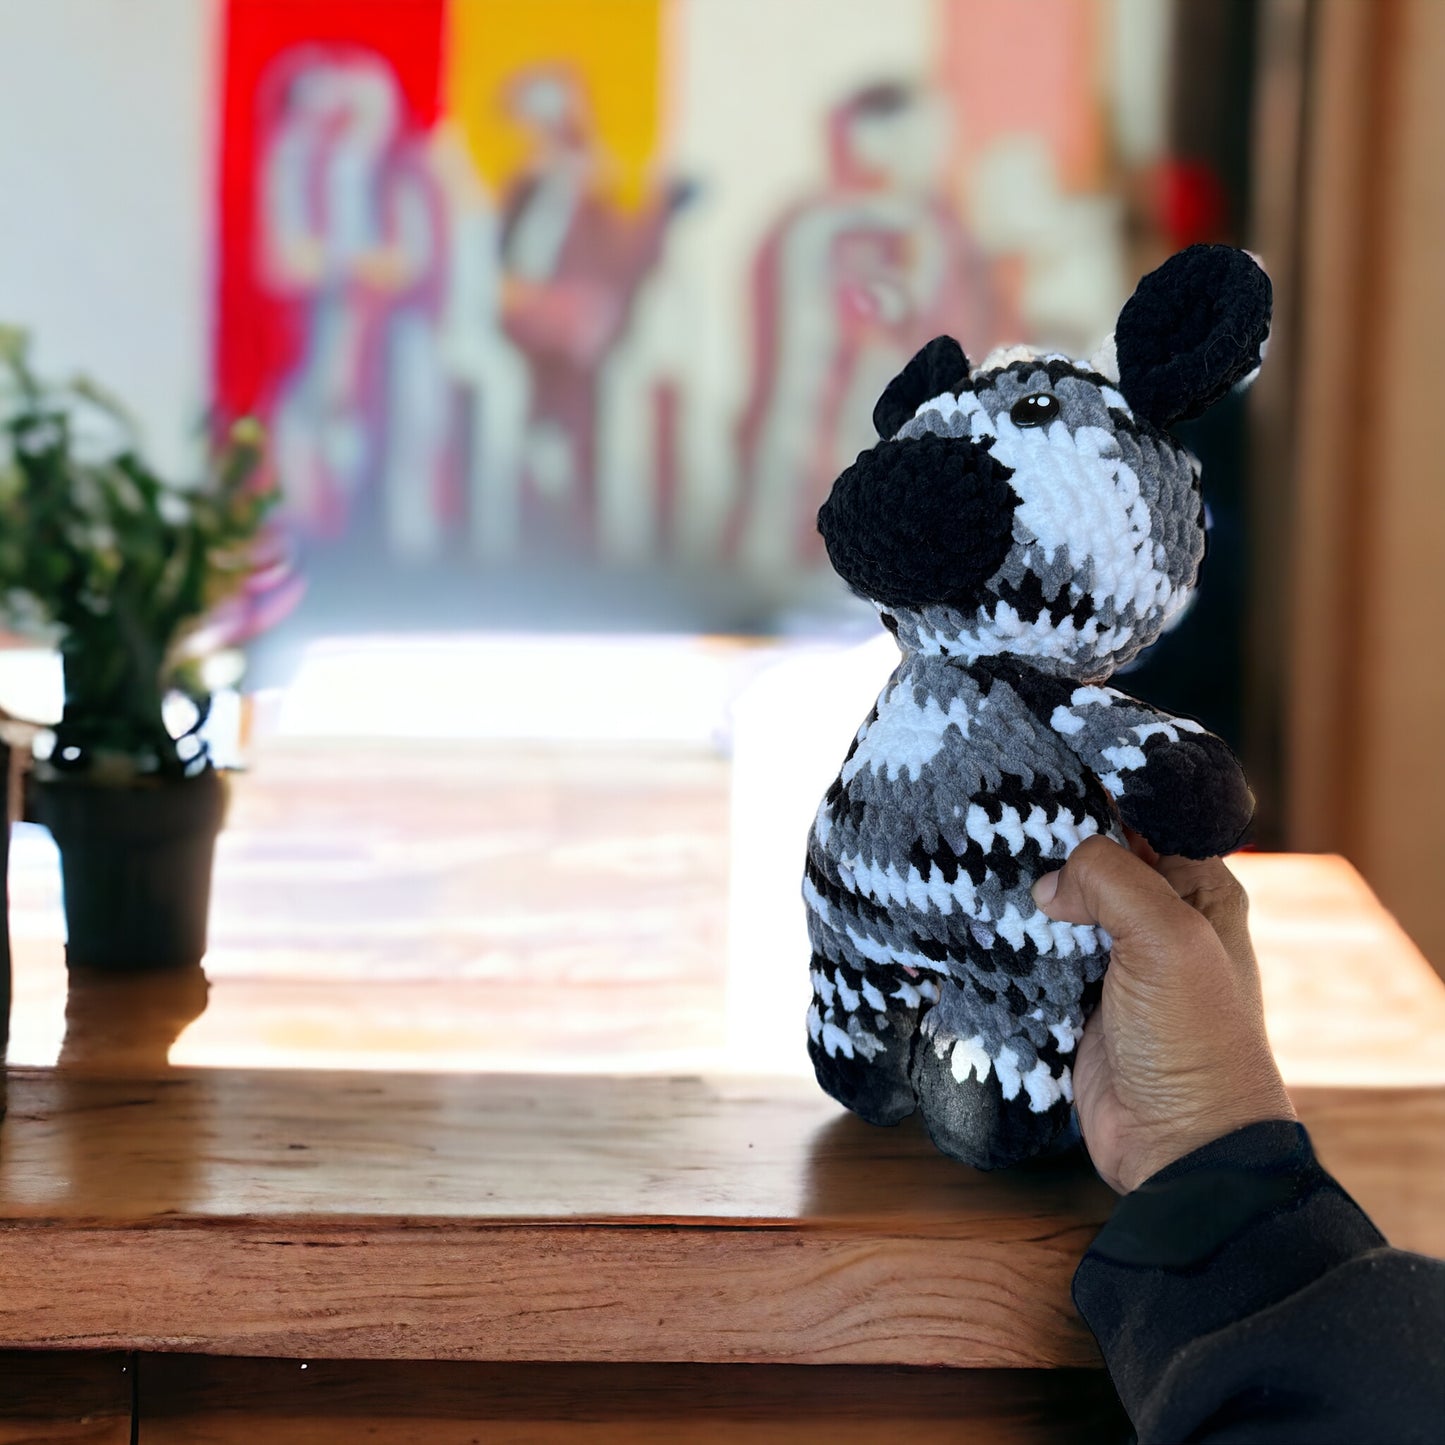 Monochrome Moo: The Black and White Variegated Cow Plush |Crochet Plushy